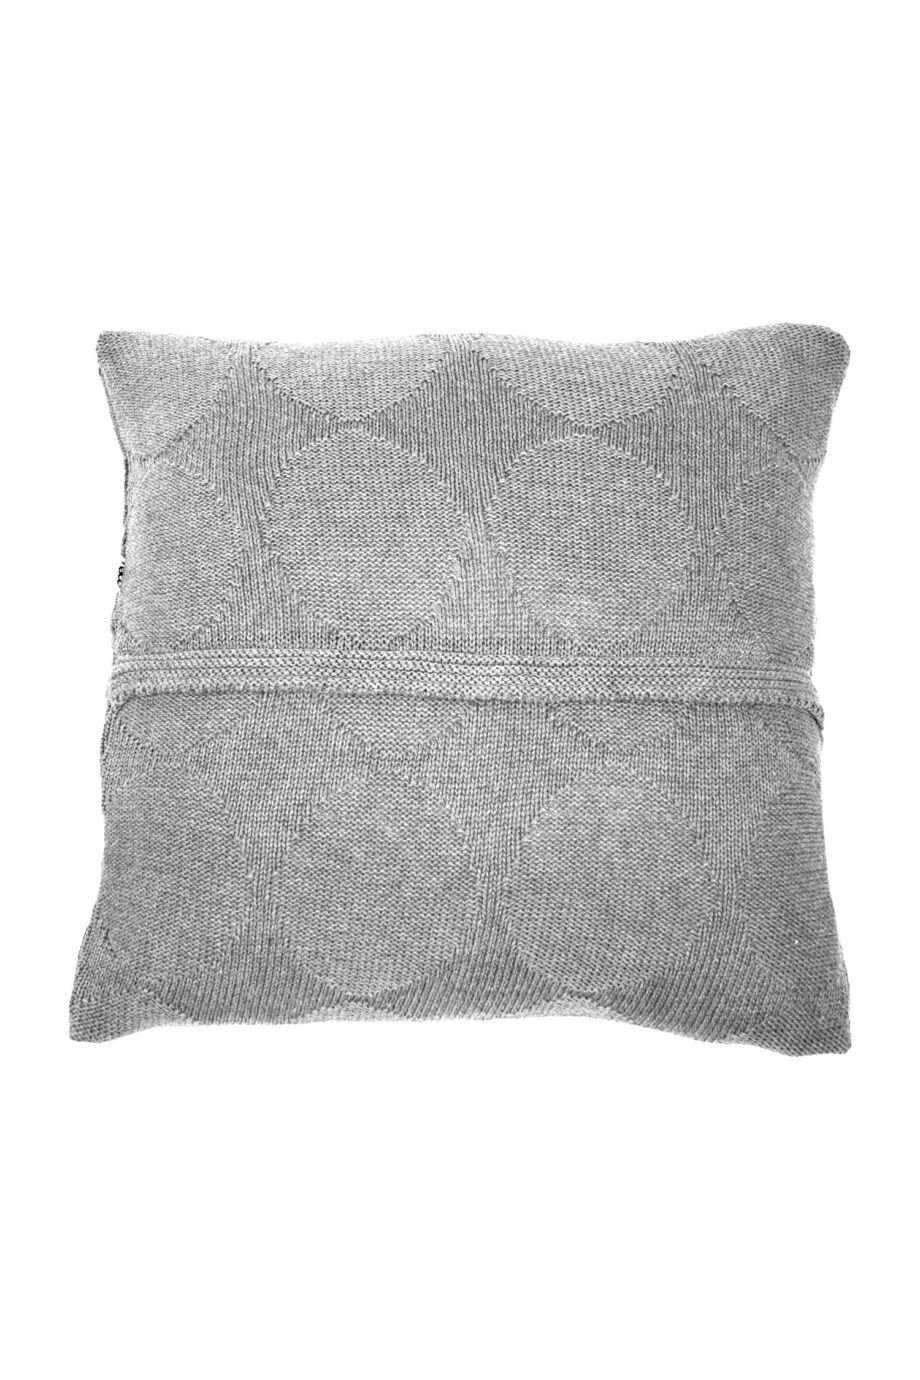 spots light grey knitted cotton pillowcase xsmall